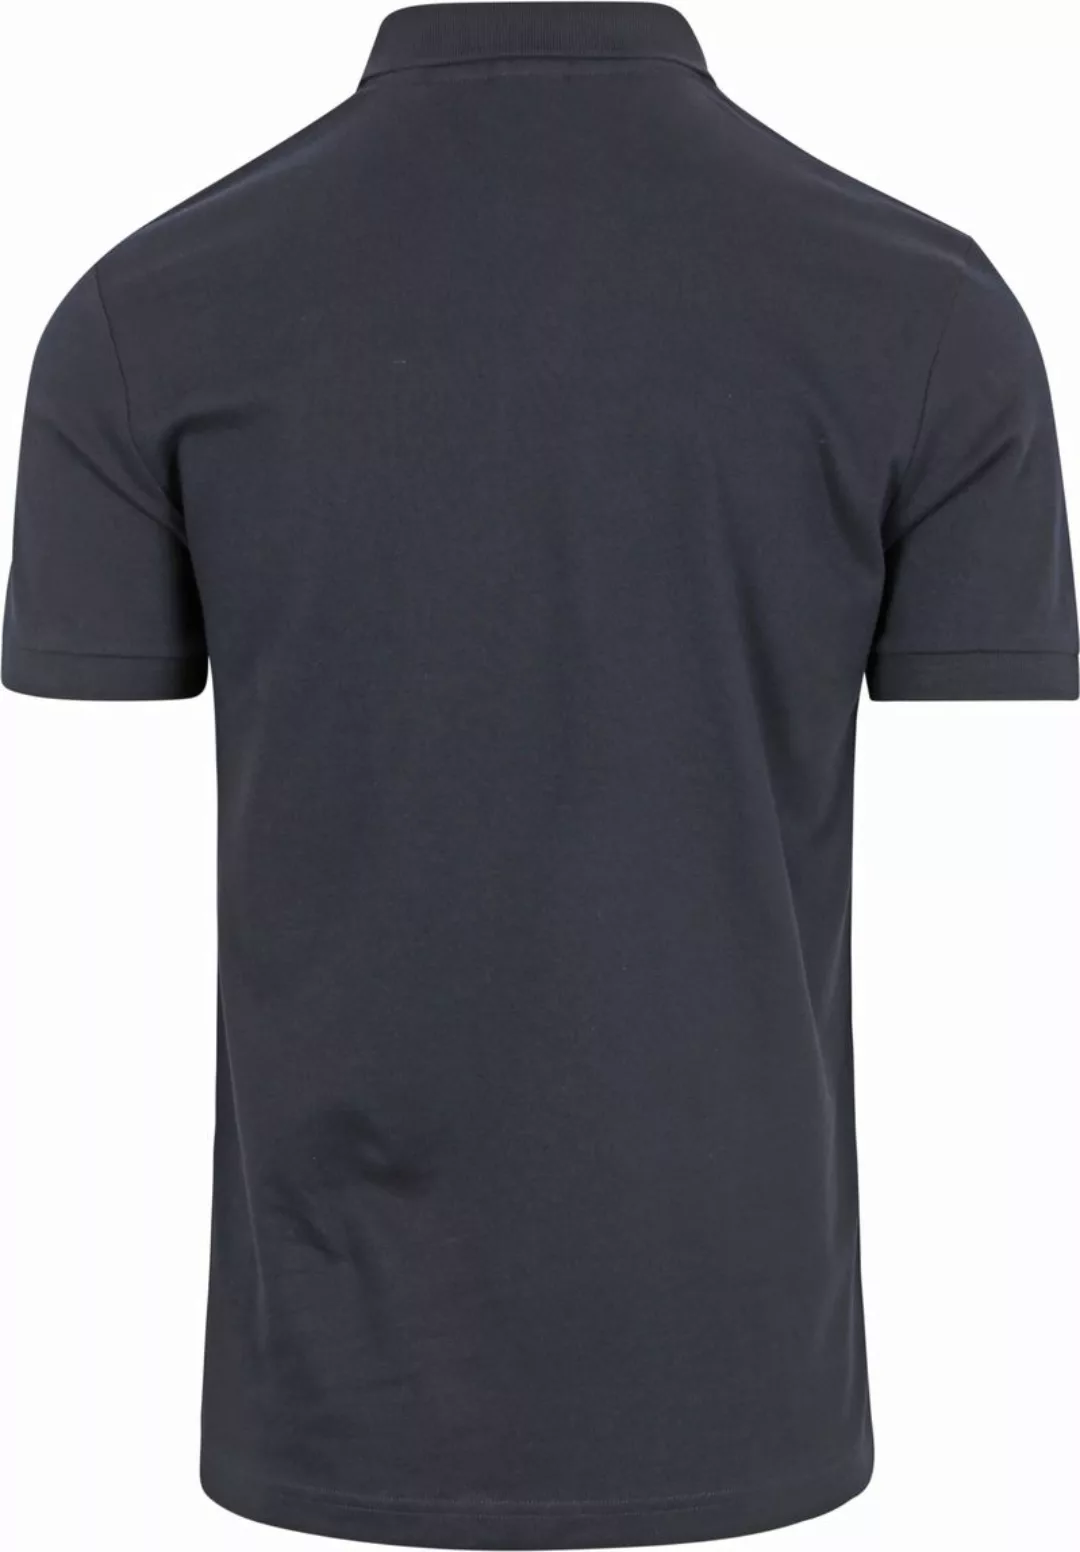 BOSS Polo Shirt Passenger Navy - Größe M günstig online kaufen